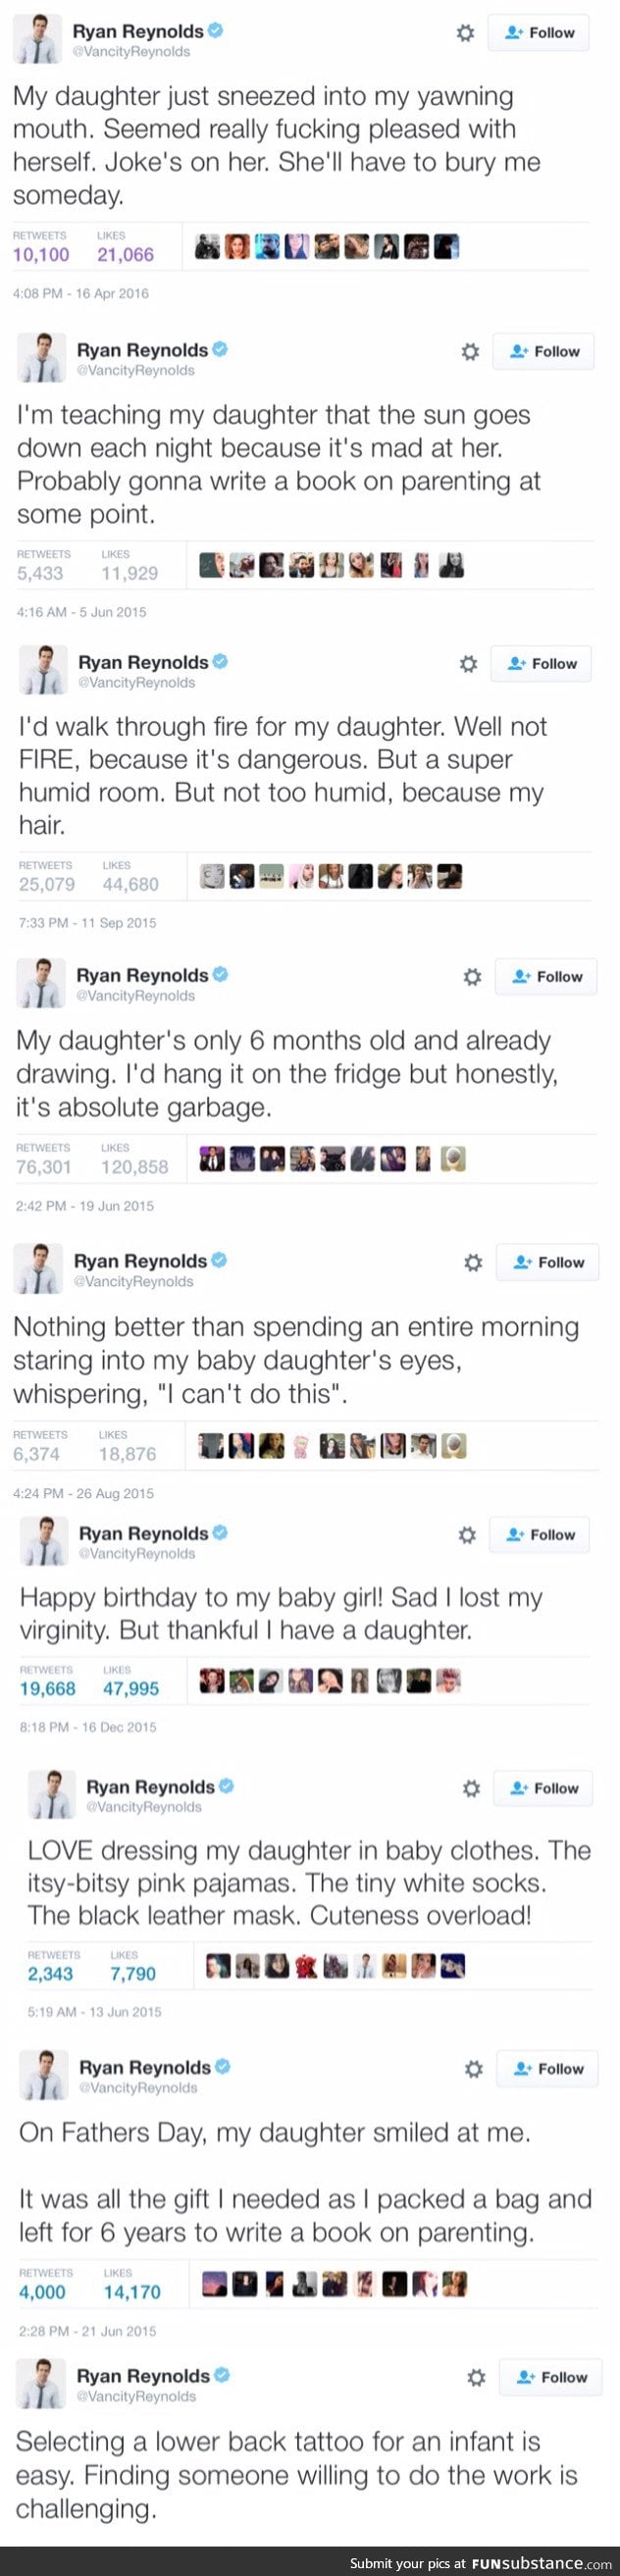 Ryan Reynolds tweets